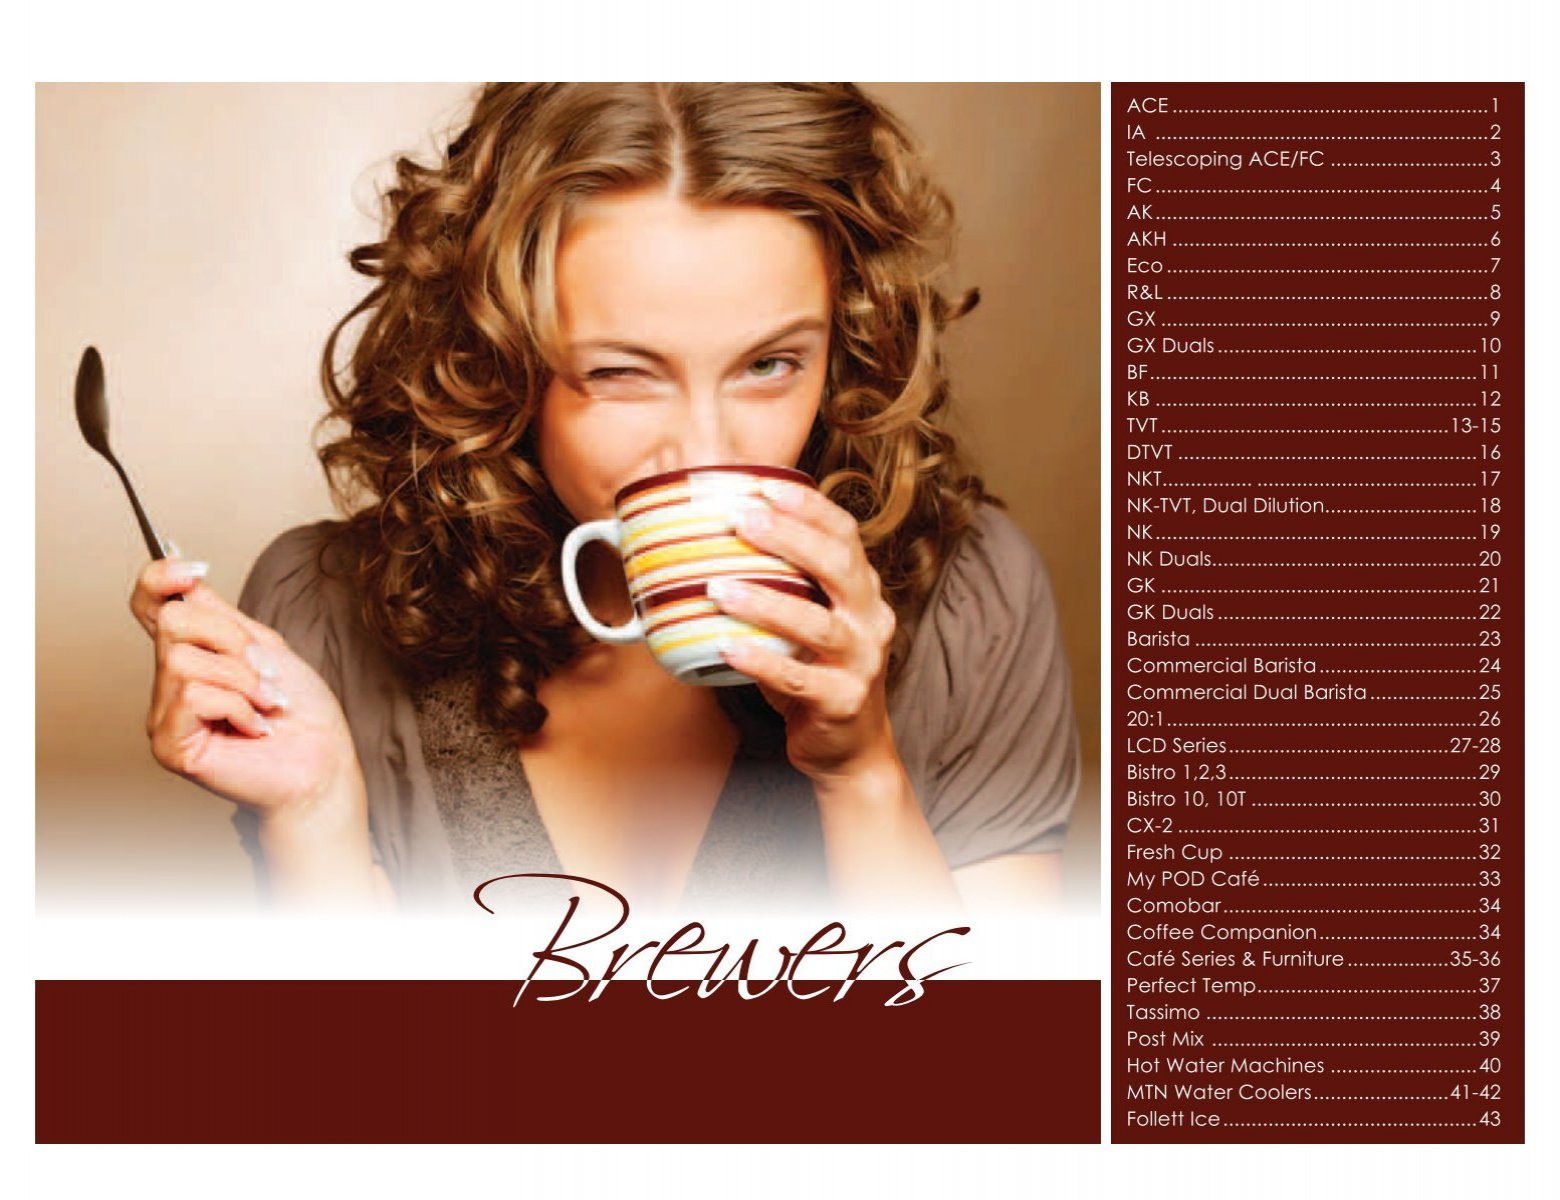 Newco AKH TC Thermal Carafe Coffee Maker - Essential Wonders Coffee Company